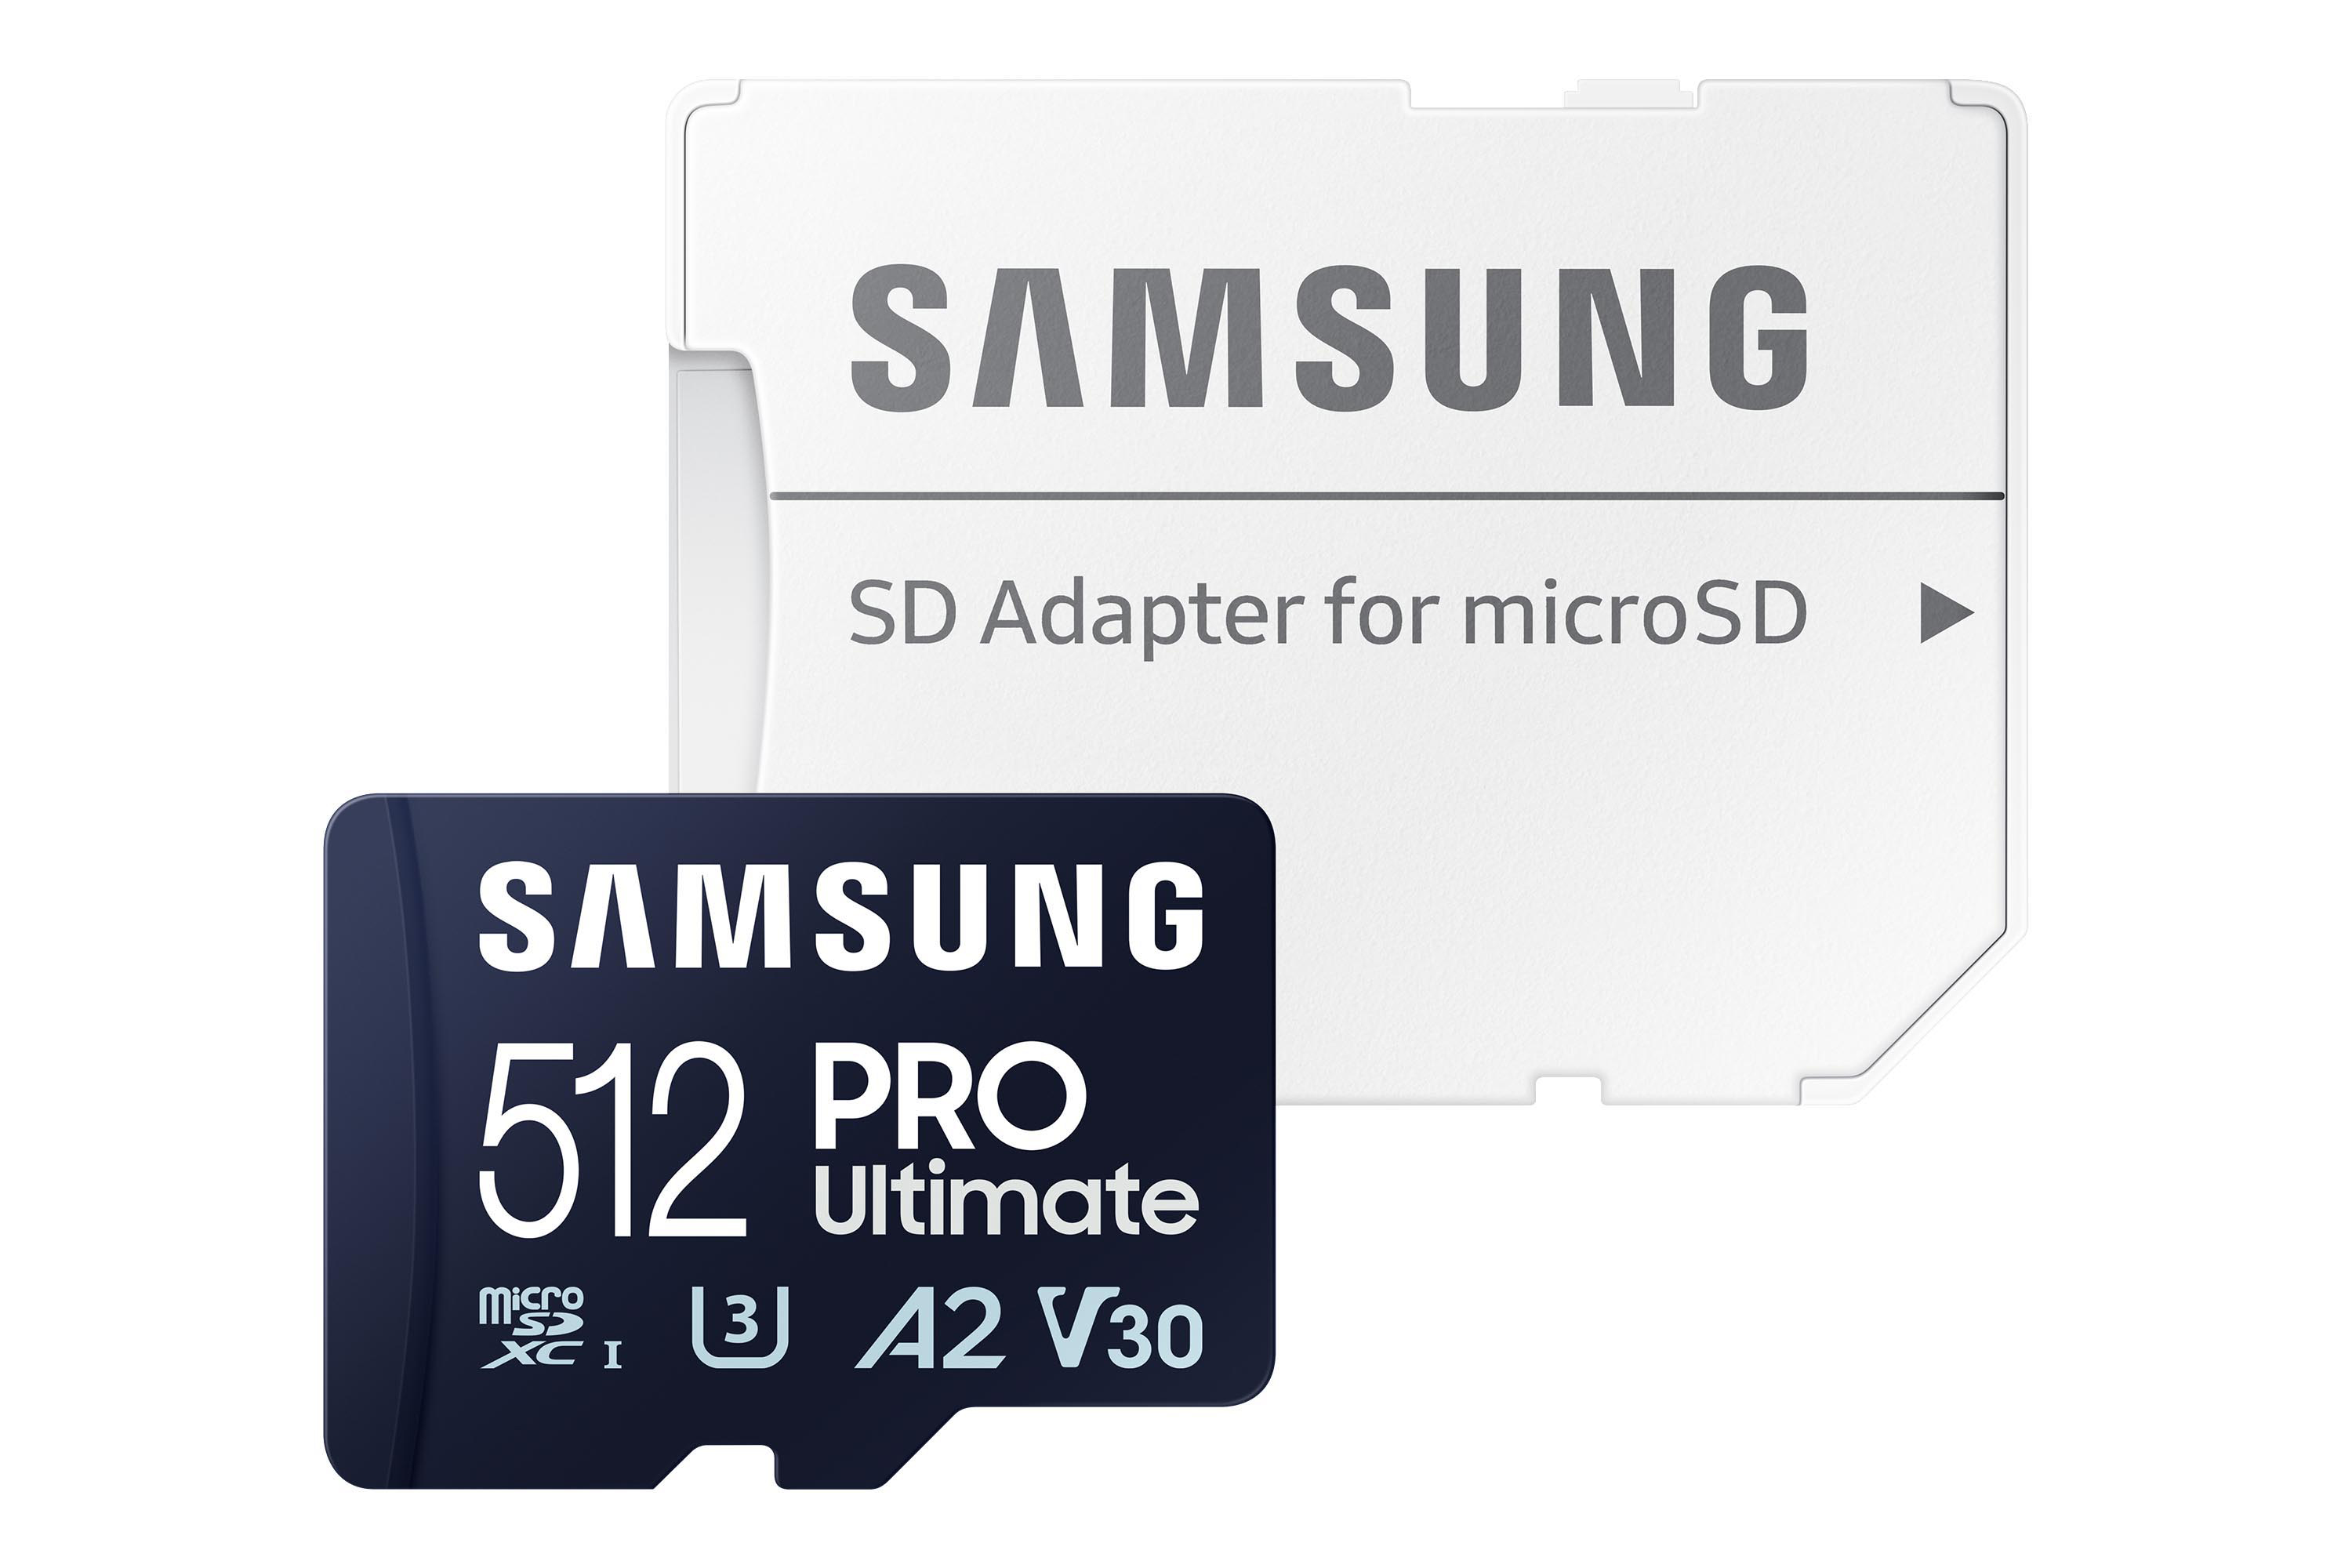 SAMSUNG PRO Ultimate, Micro-SD Speicherkarte, 512 MB/s 200 GB